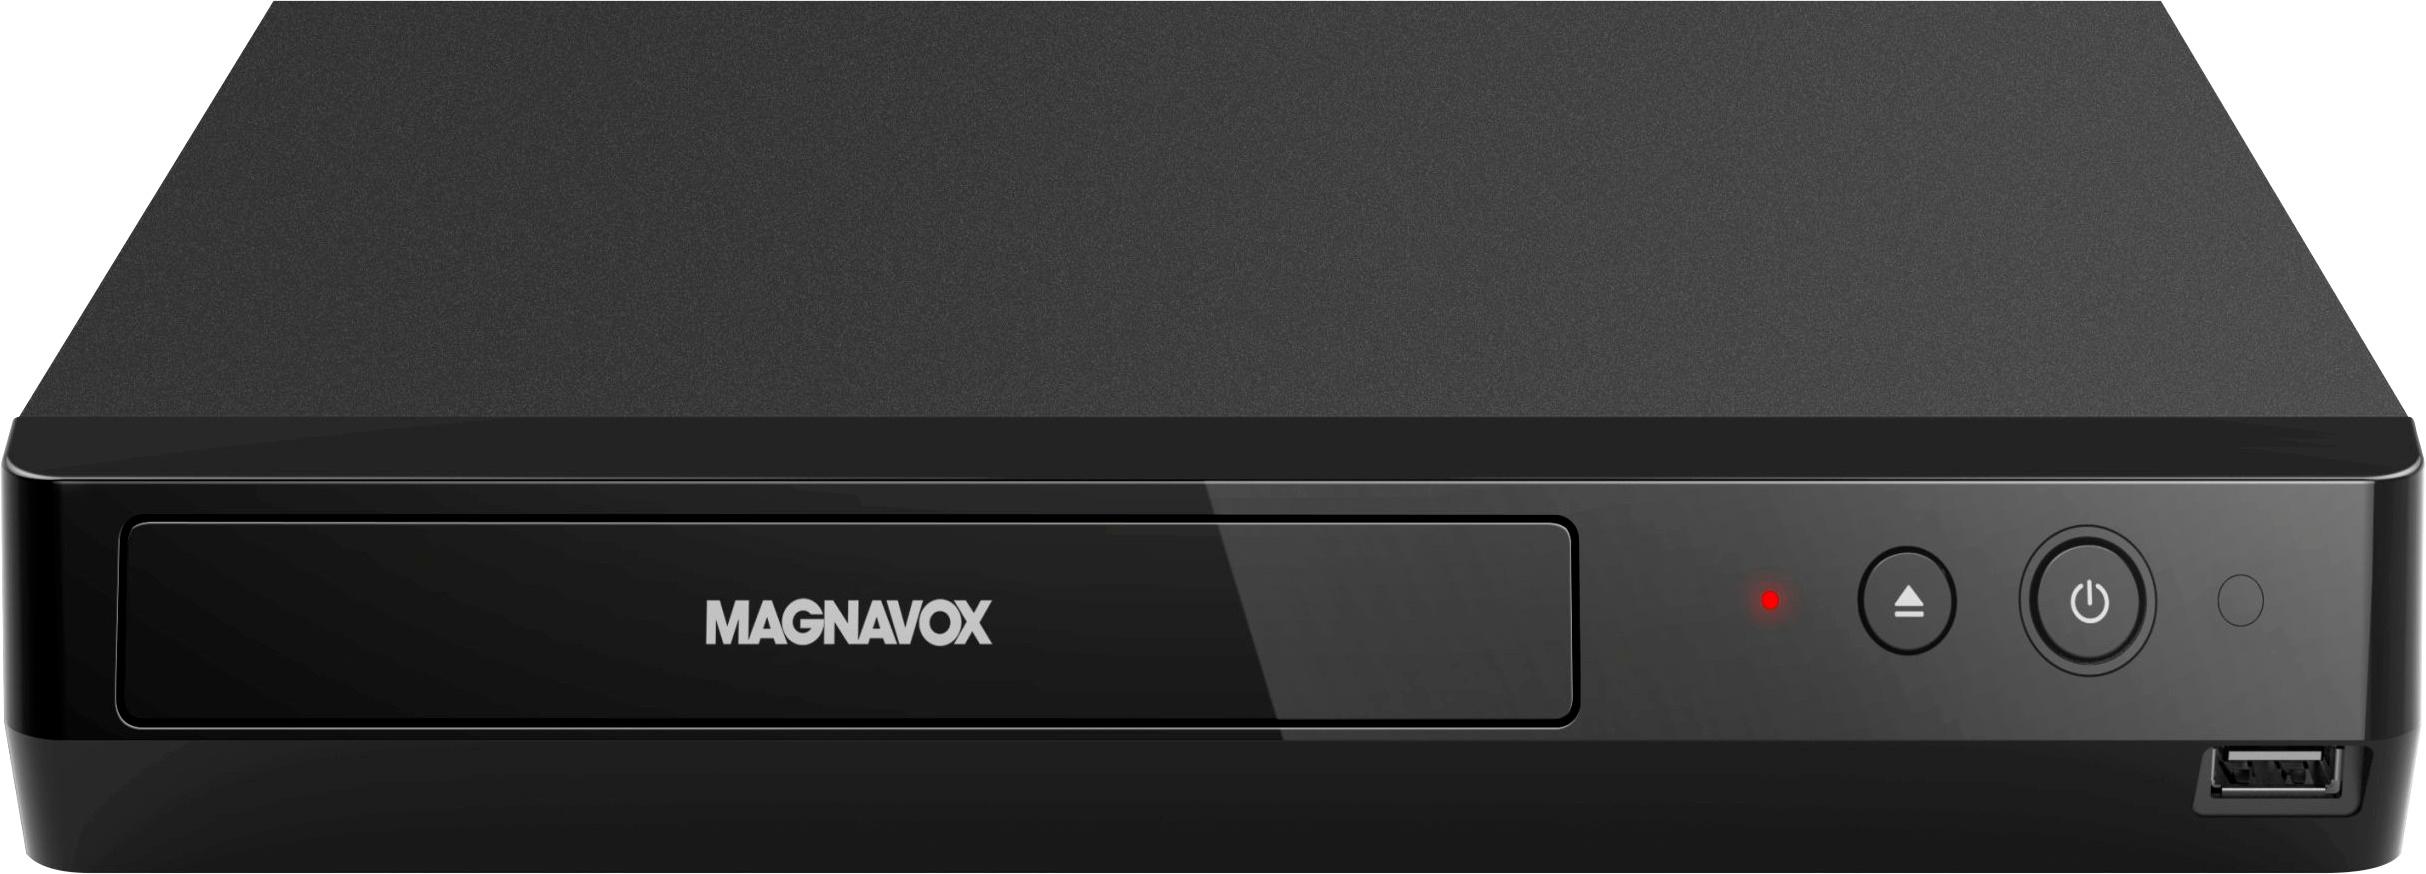 Best Buy Magnavox Mbp6700p 4k Ultra Hd Blu Ray Player Black Mbp6700 F7